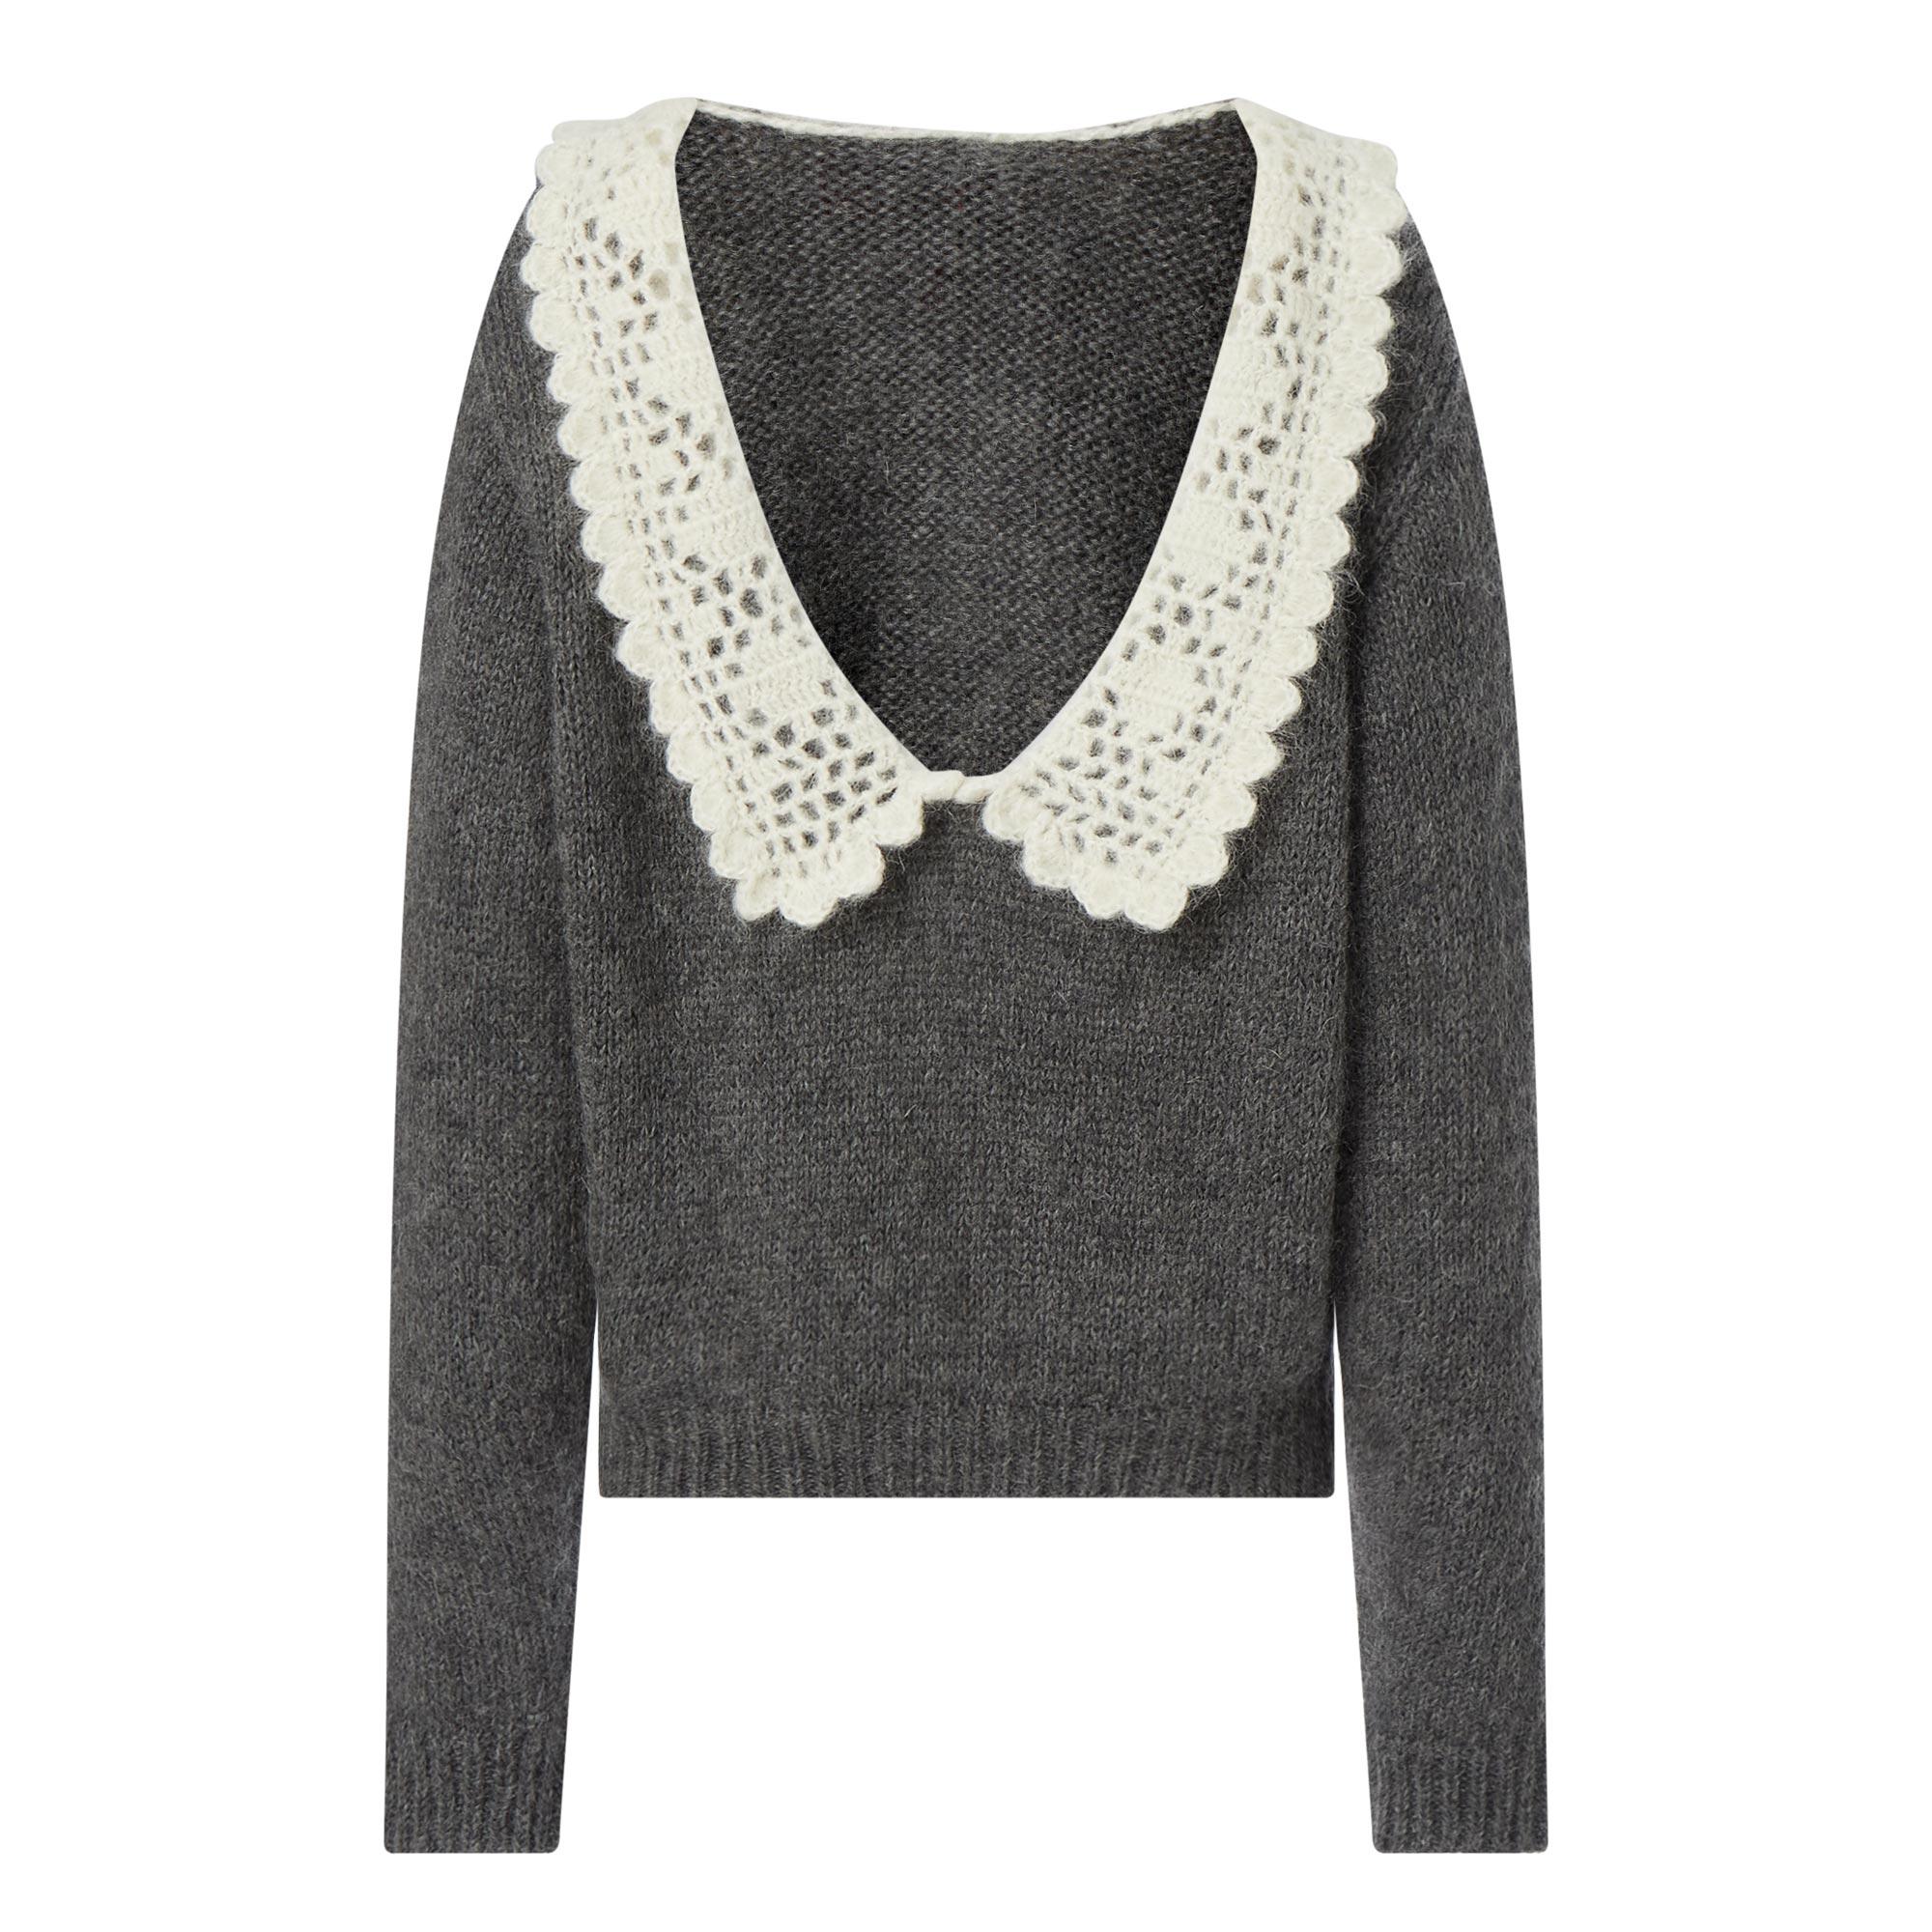 Crochet Knitted Sweater